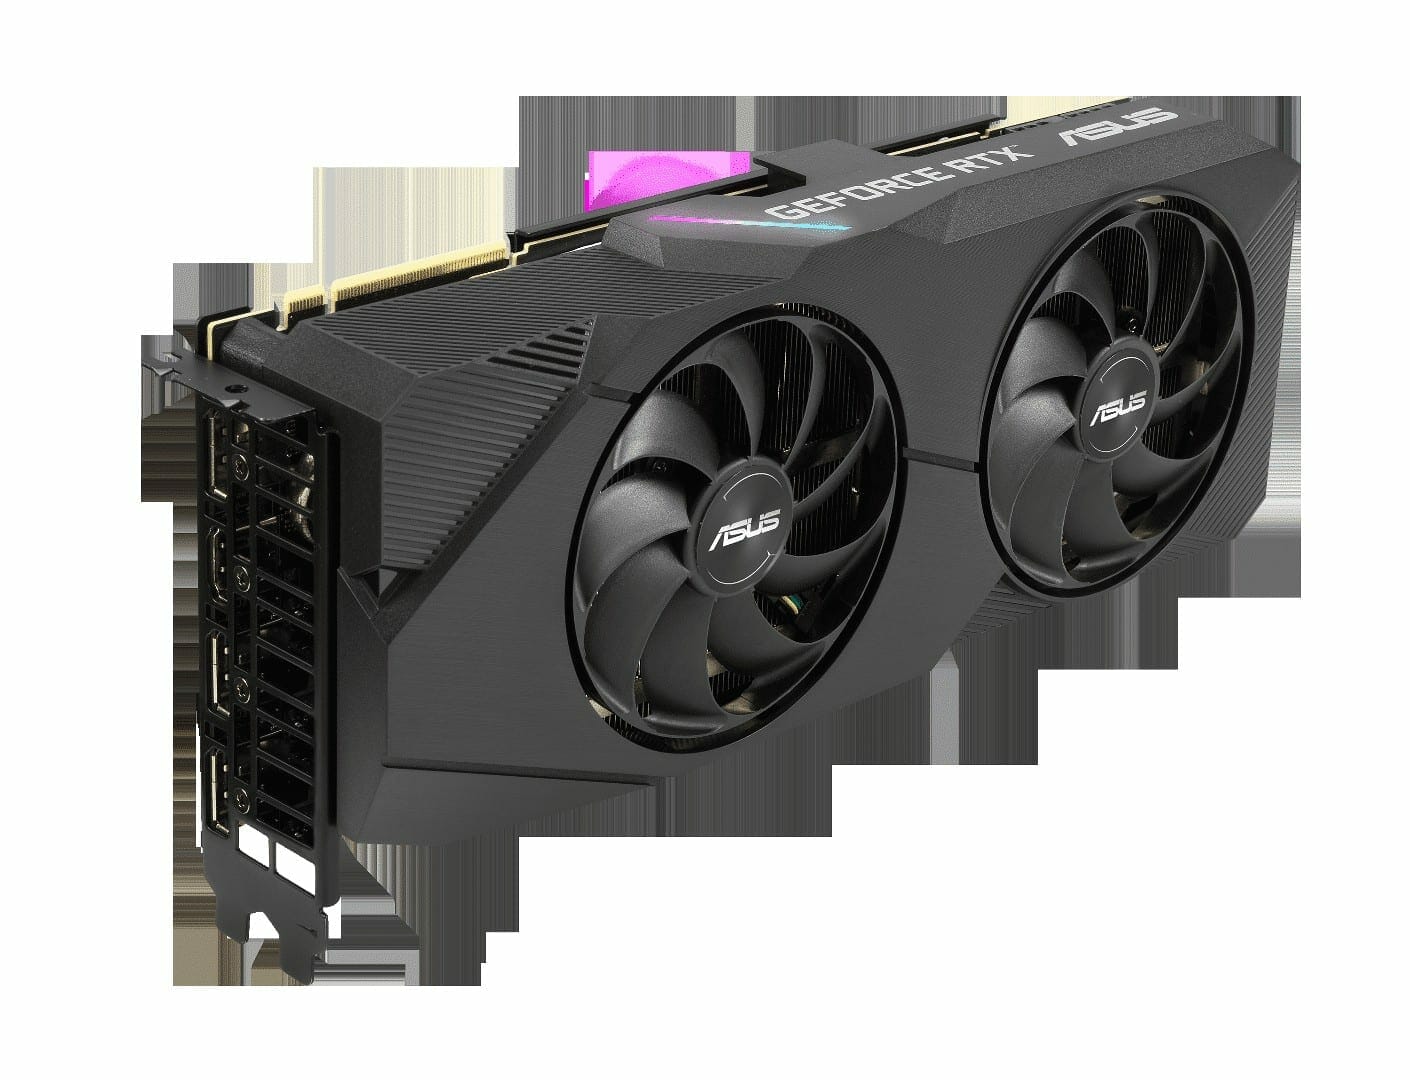 ASUS เปิดตัวกราฟิกการ์ด Nvidia GeForce RTX 2080, 2070, และ 2060 SUPER พร้อมกันถึง 8 รุ่น ครบทุกซีรีส์ 5